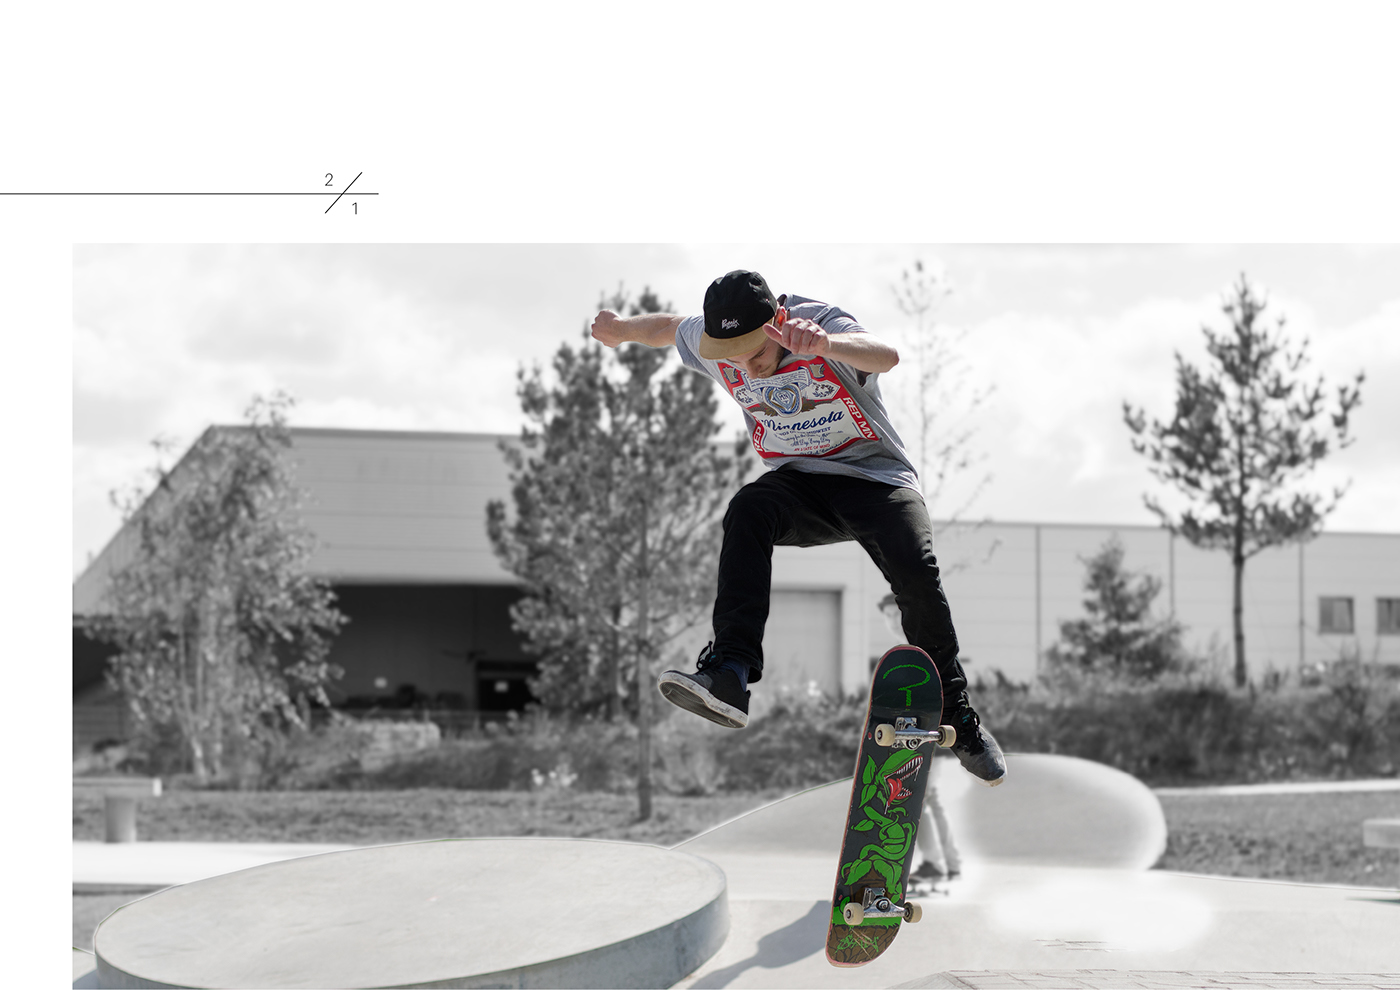 skate skateboard amercian Vans shooting bmx shady shadyskatebording